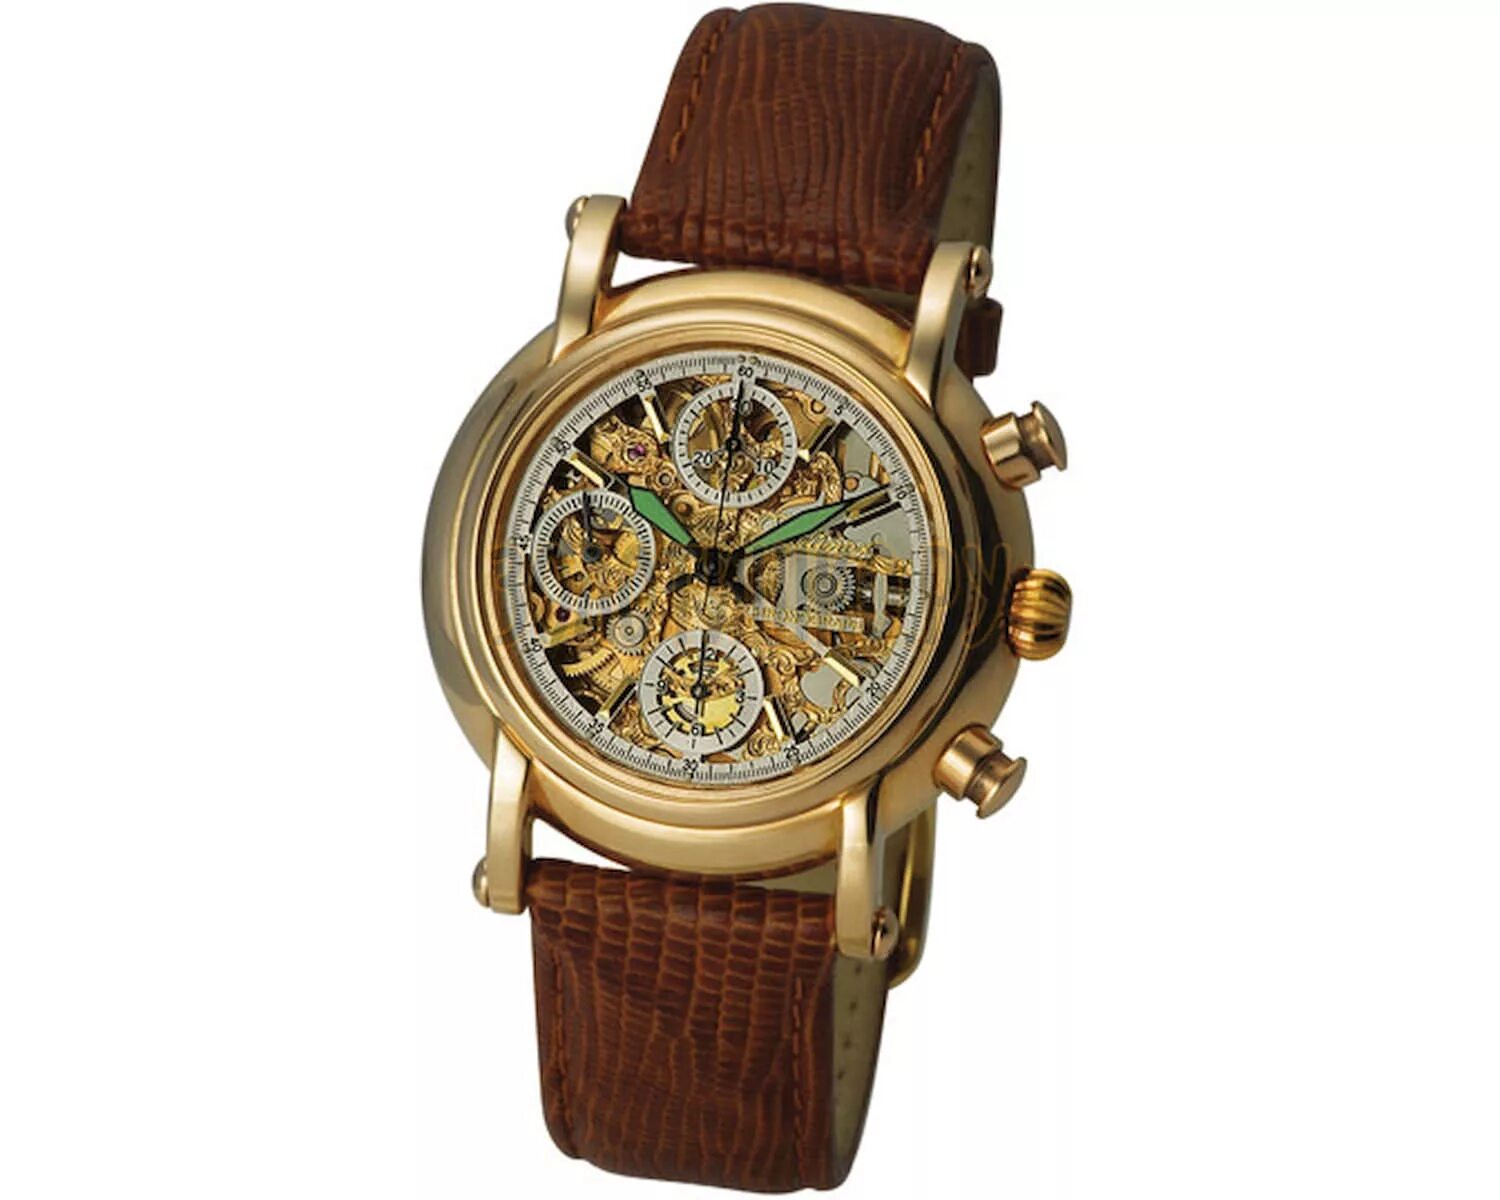 Мужские золотые часы Адмирал-2 Платинор. Платинор часы скелетоны. Часы Platinor Адмирал. Часы Платинор мужские Адмирал. Швейцарские золотые мужские